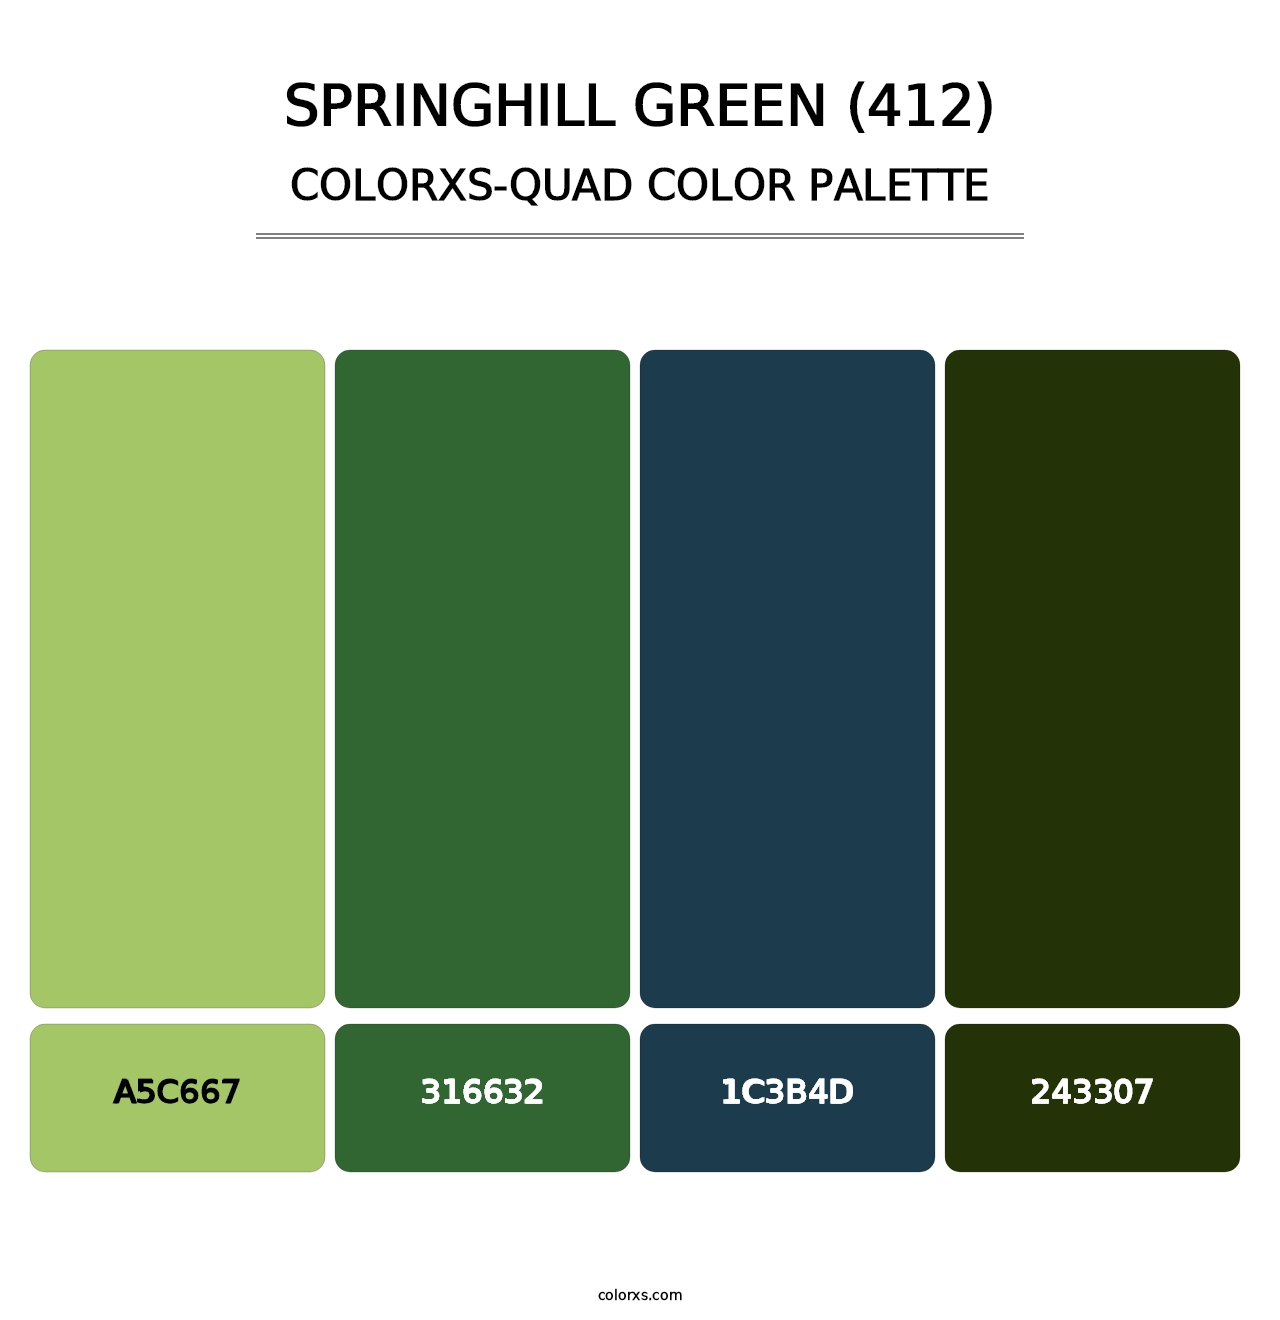 Springhill Green (412) - Colorxs Quad Palette